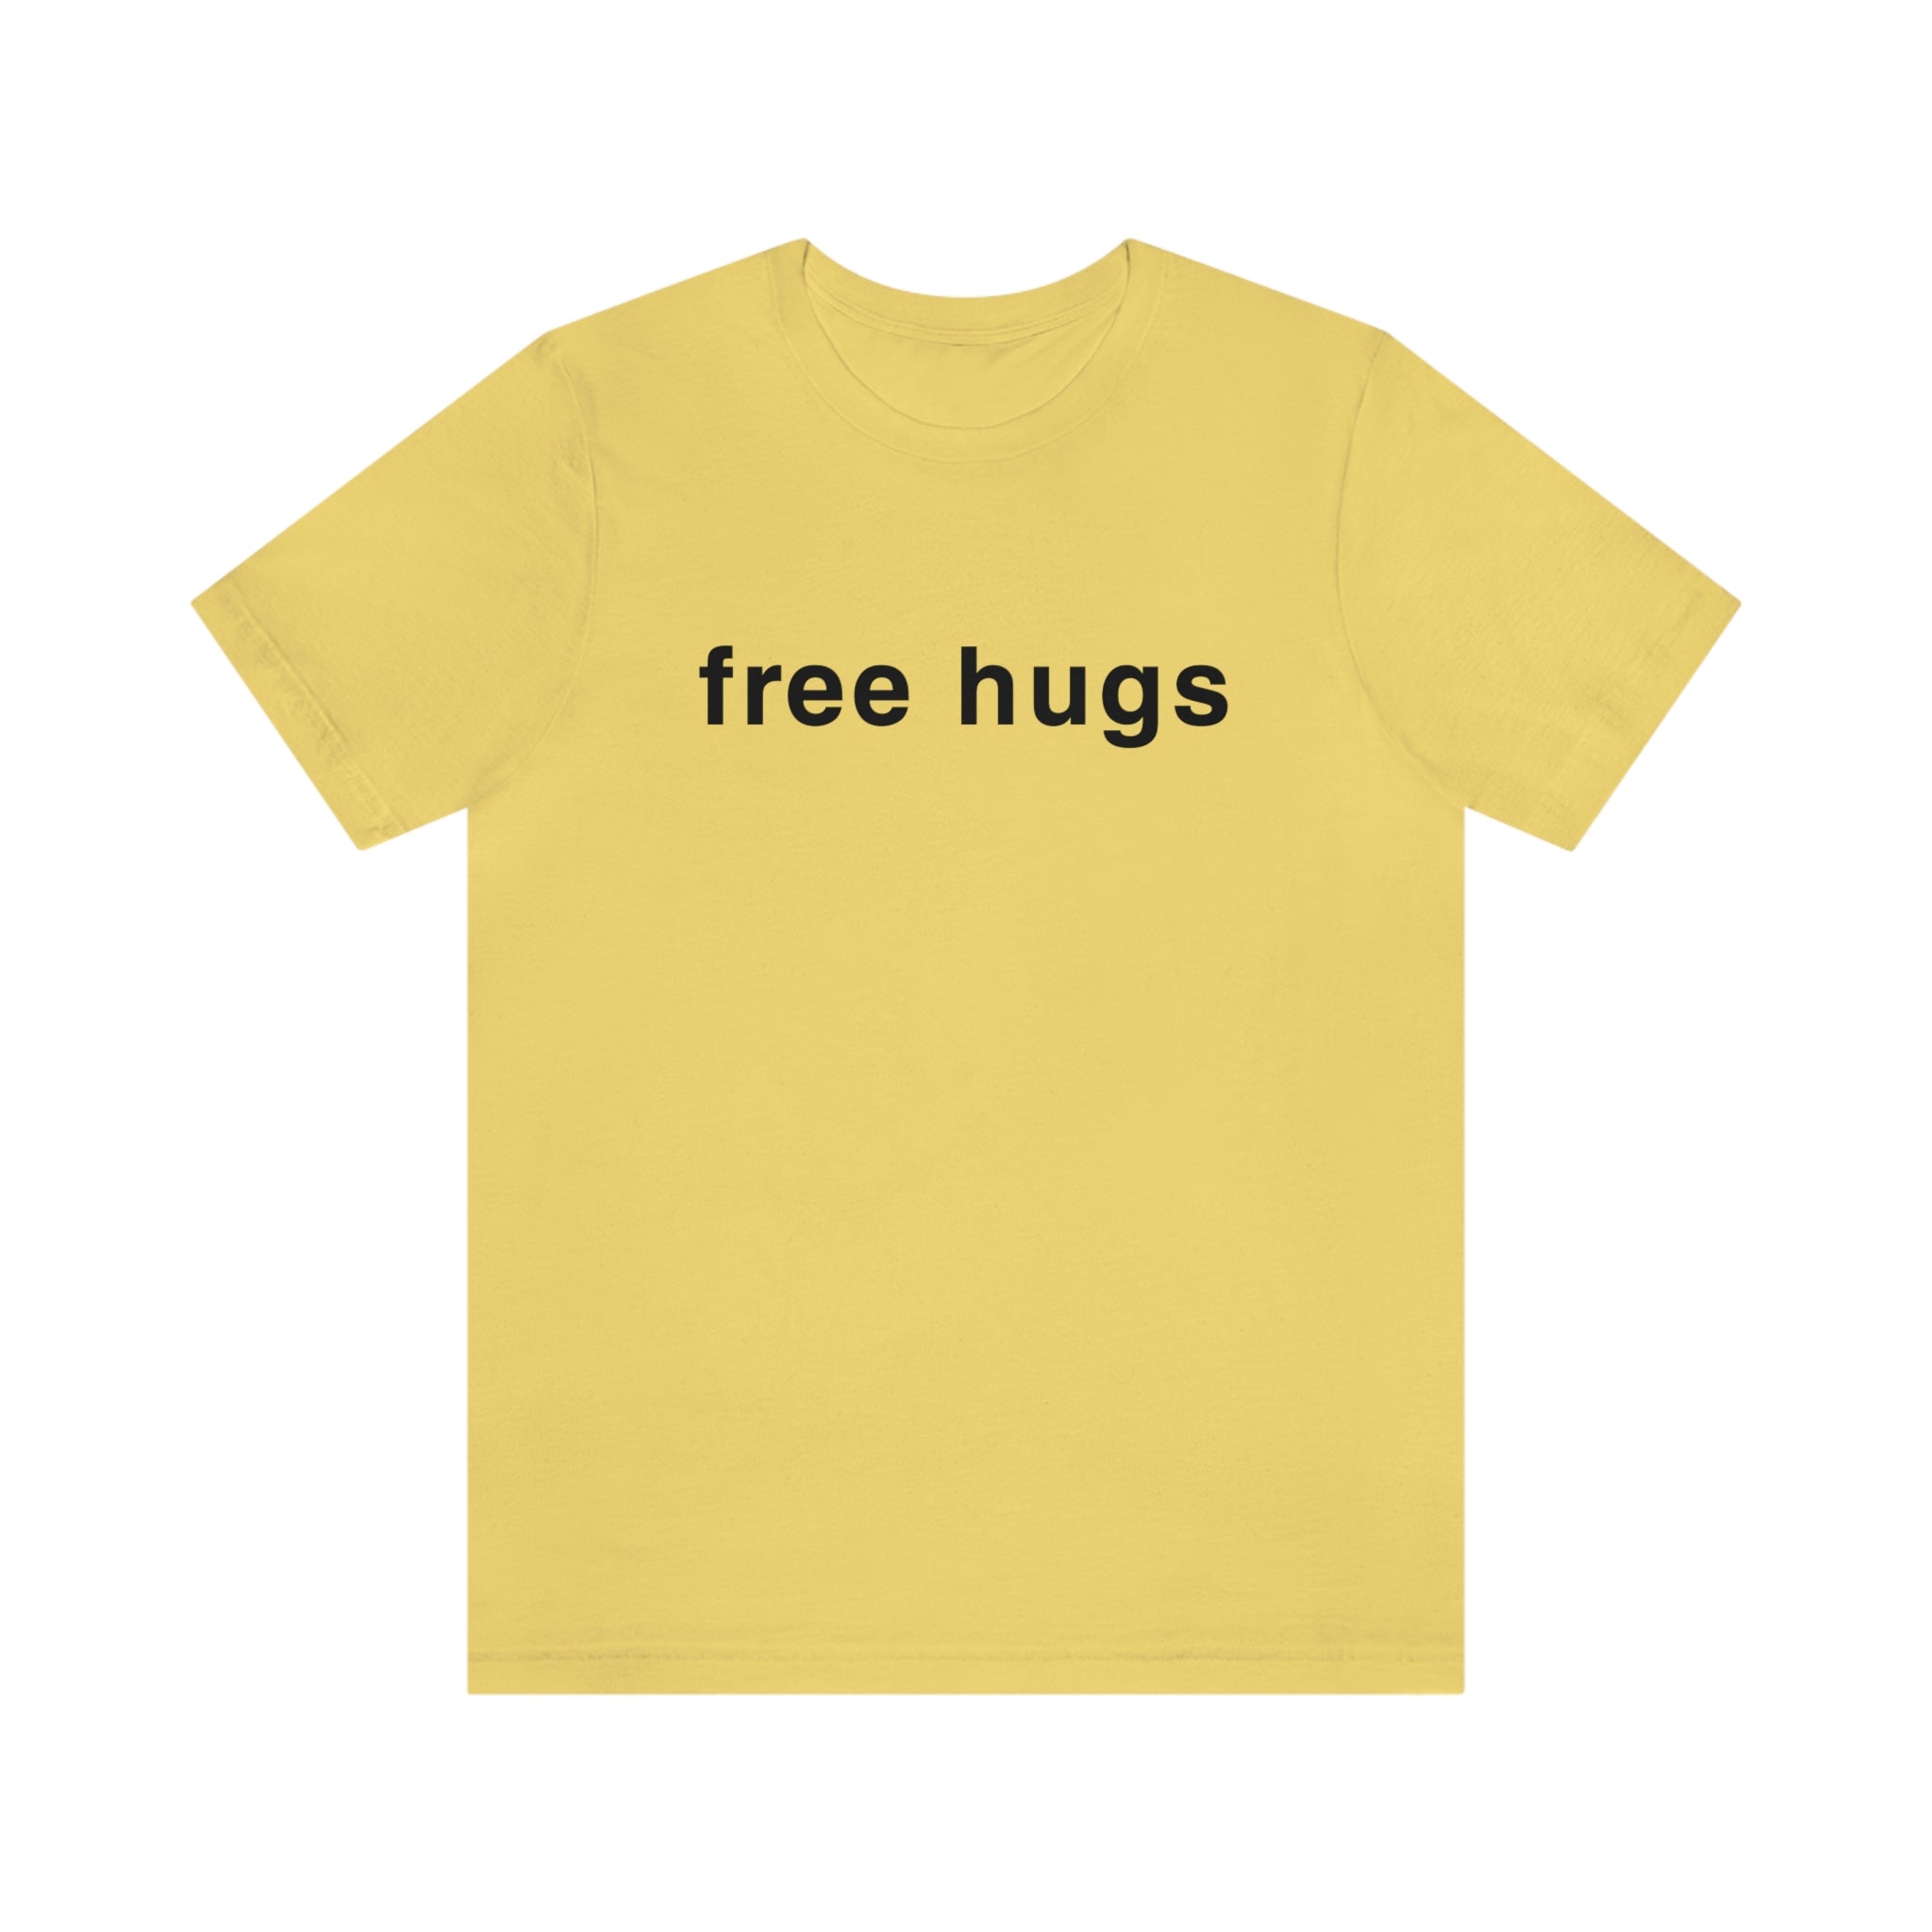 Unbranded - free hugs : Unisex 100% Comfy Cotton T-Shirt